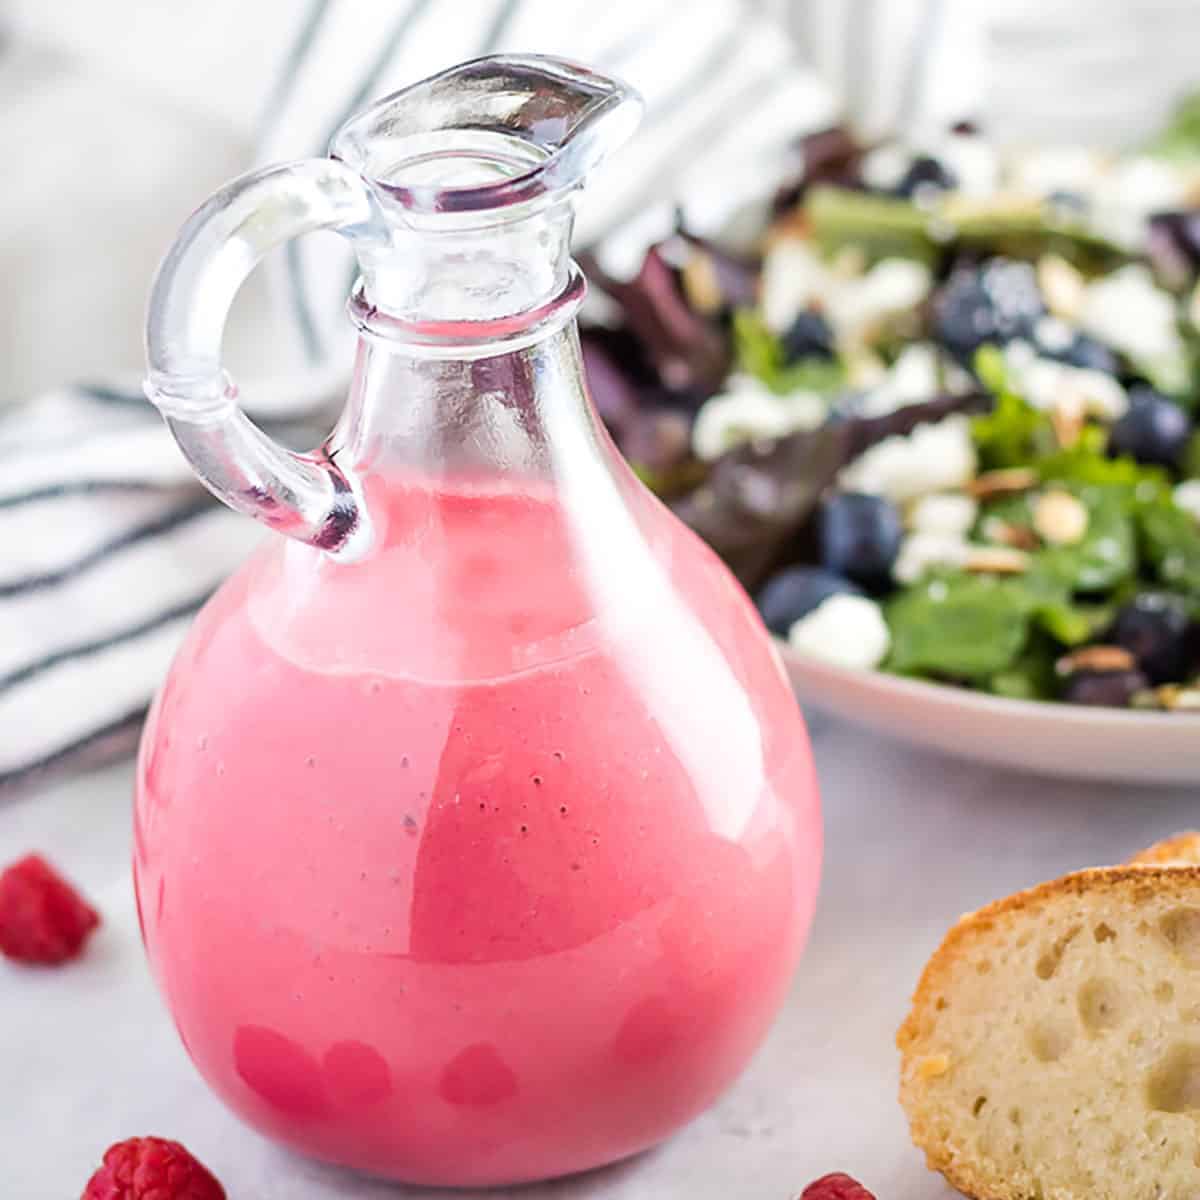 A jar of raspberry vinaigrette dressing with fresh raspberries and a salad.